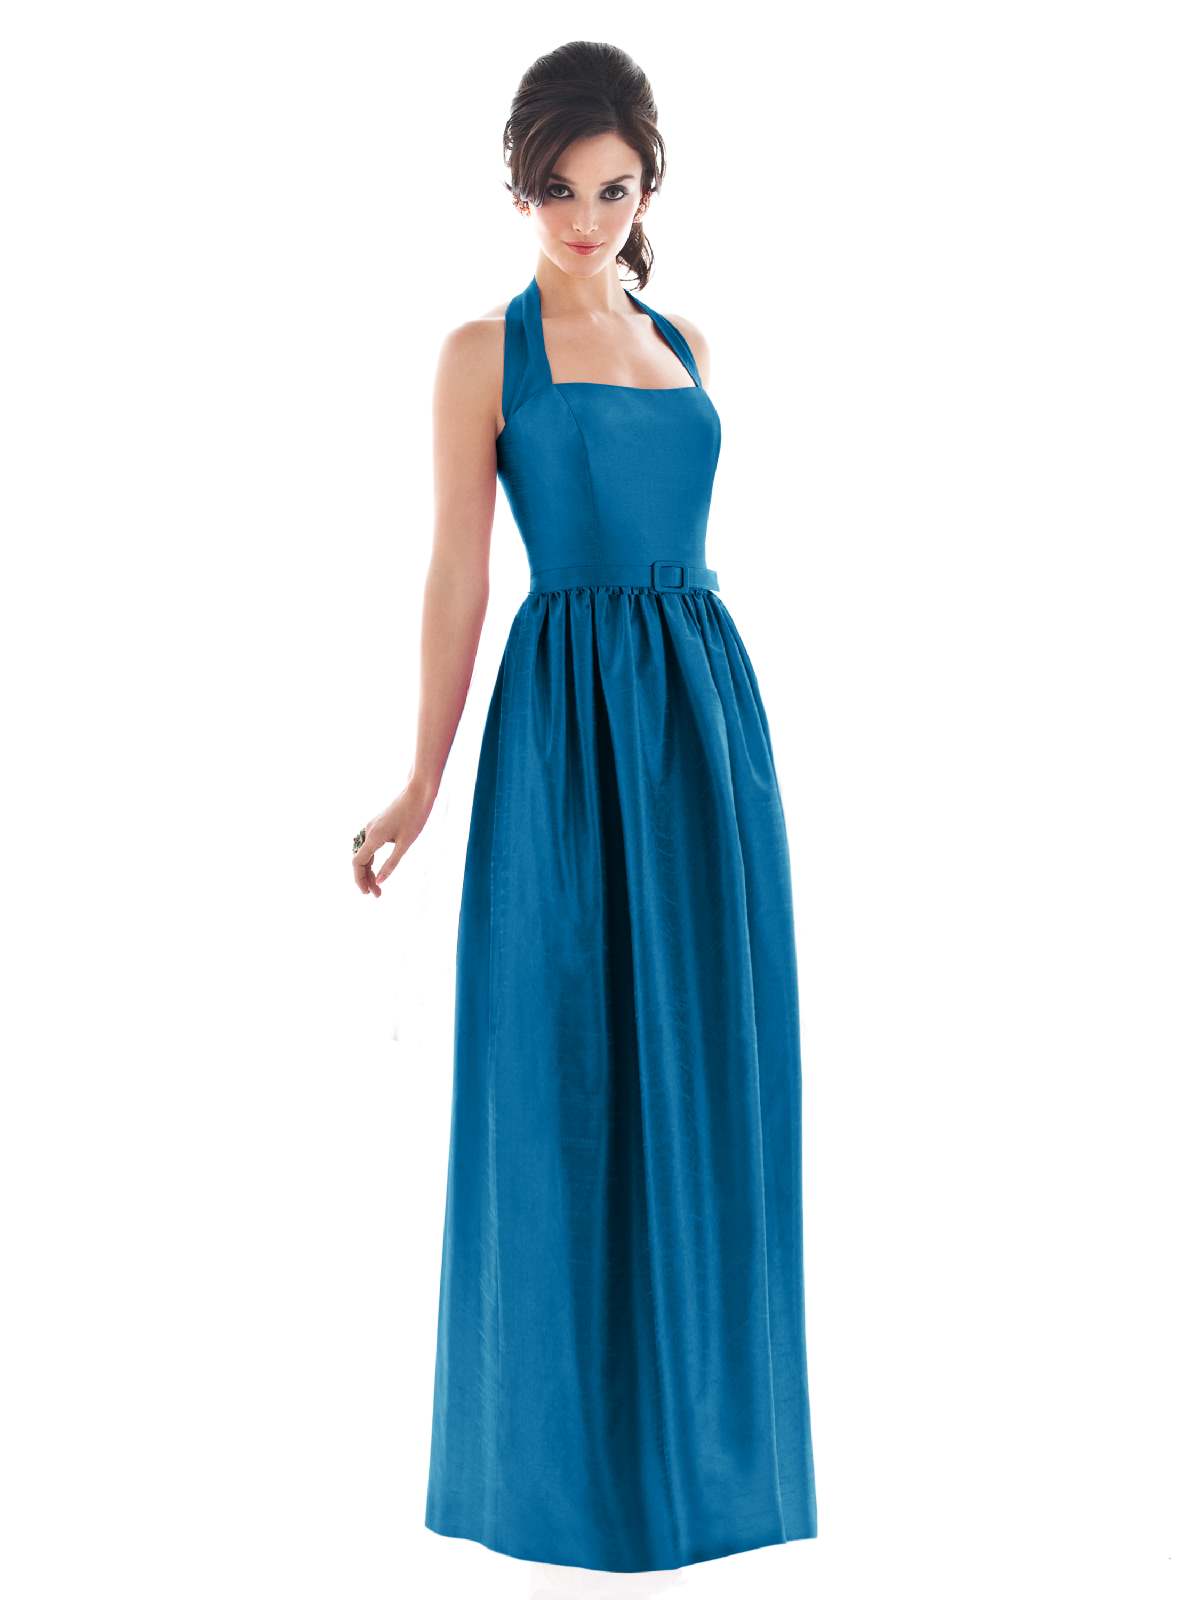 Blue A Line Halter Low Back Drapes Floor Length Prom Dresses With Belt